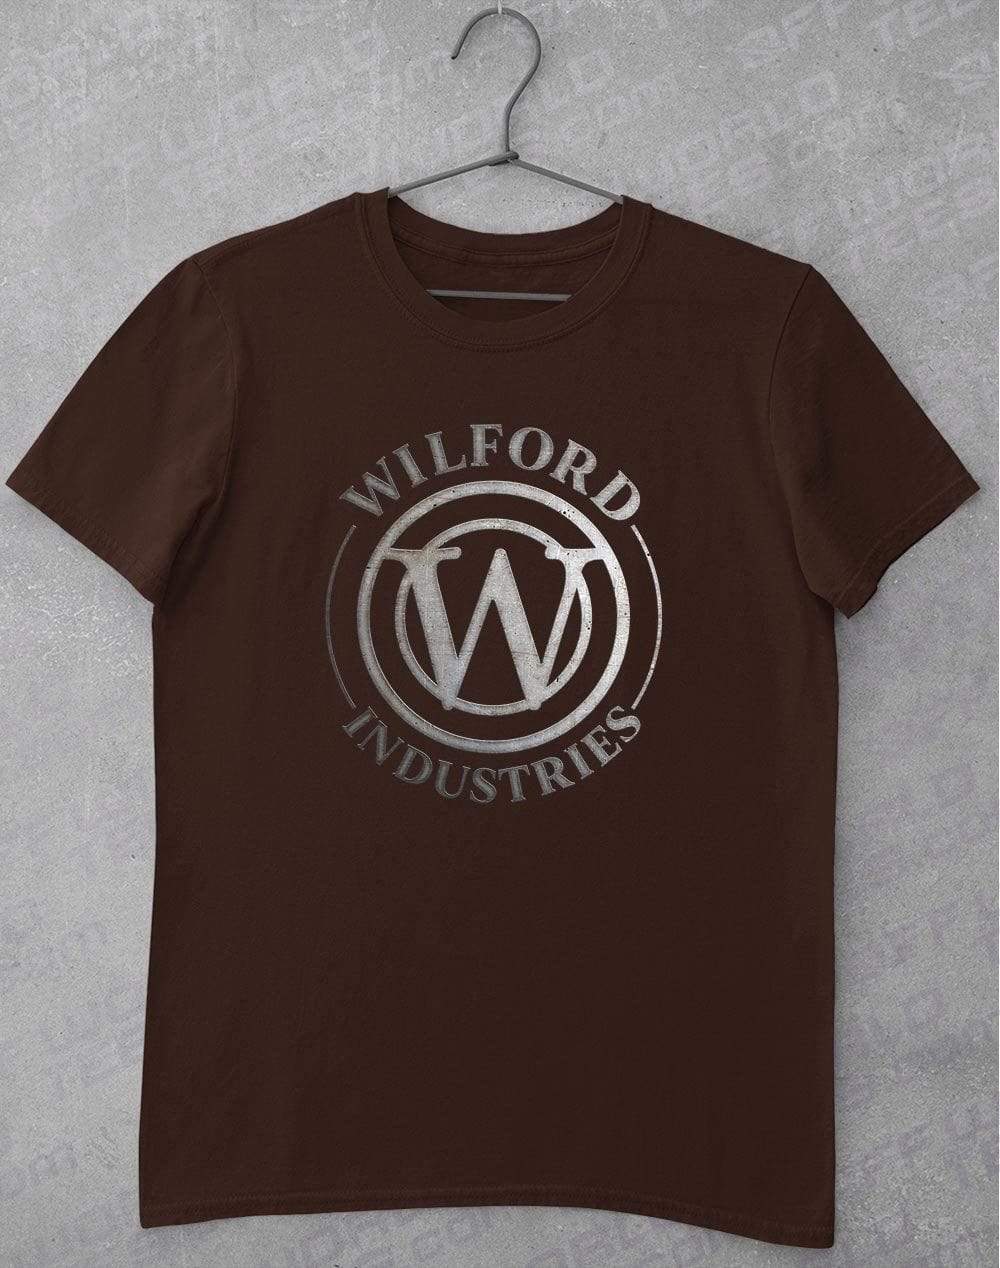 Wilford Industries T-Shirt S / Dark Chocolate  - Off World Tees